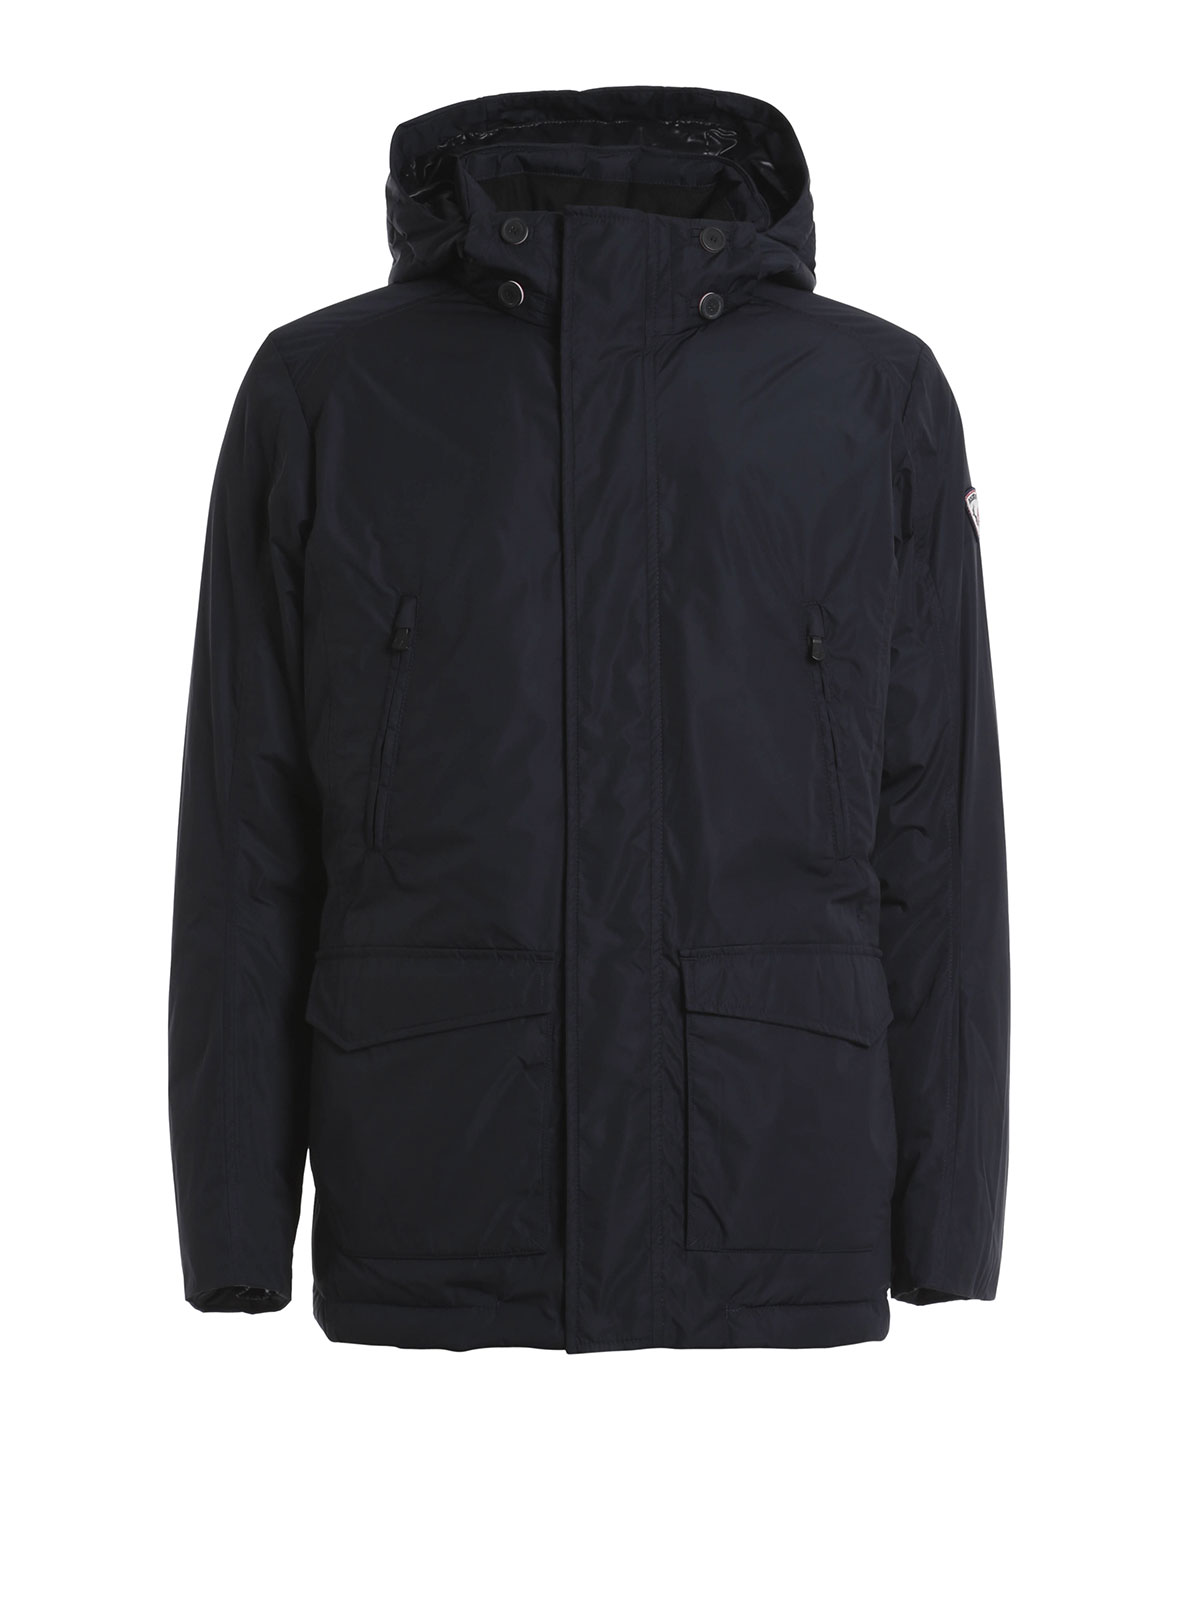 Rossignol - Axel jacket - parkas - RLEMJ56715 | Shop online at iKRIX